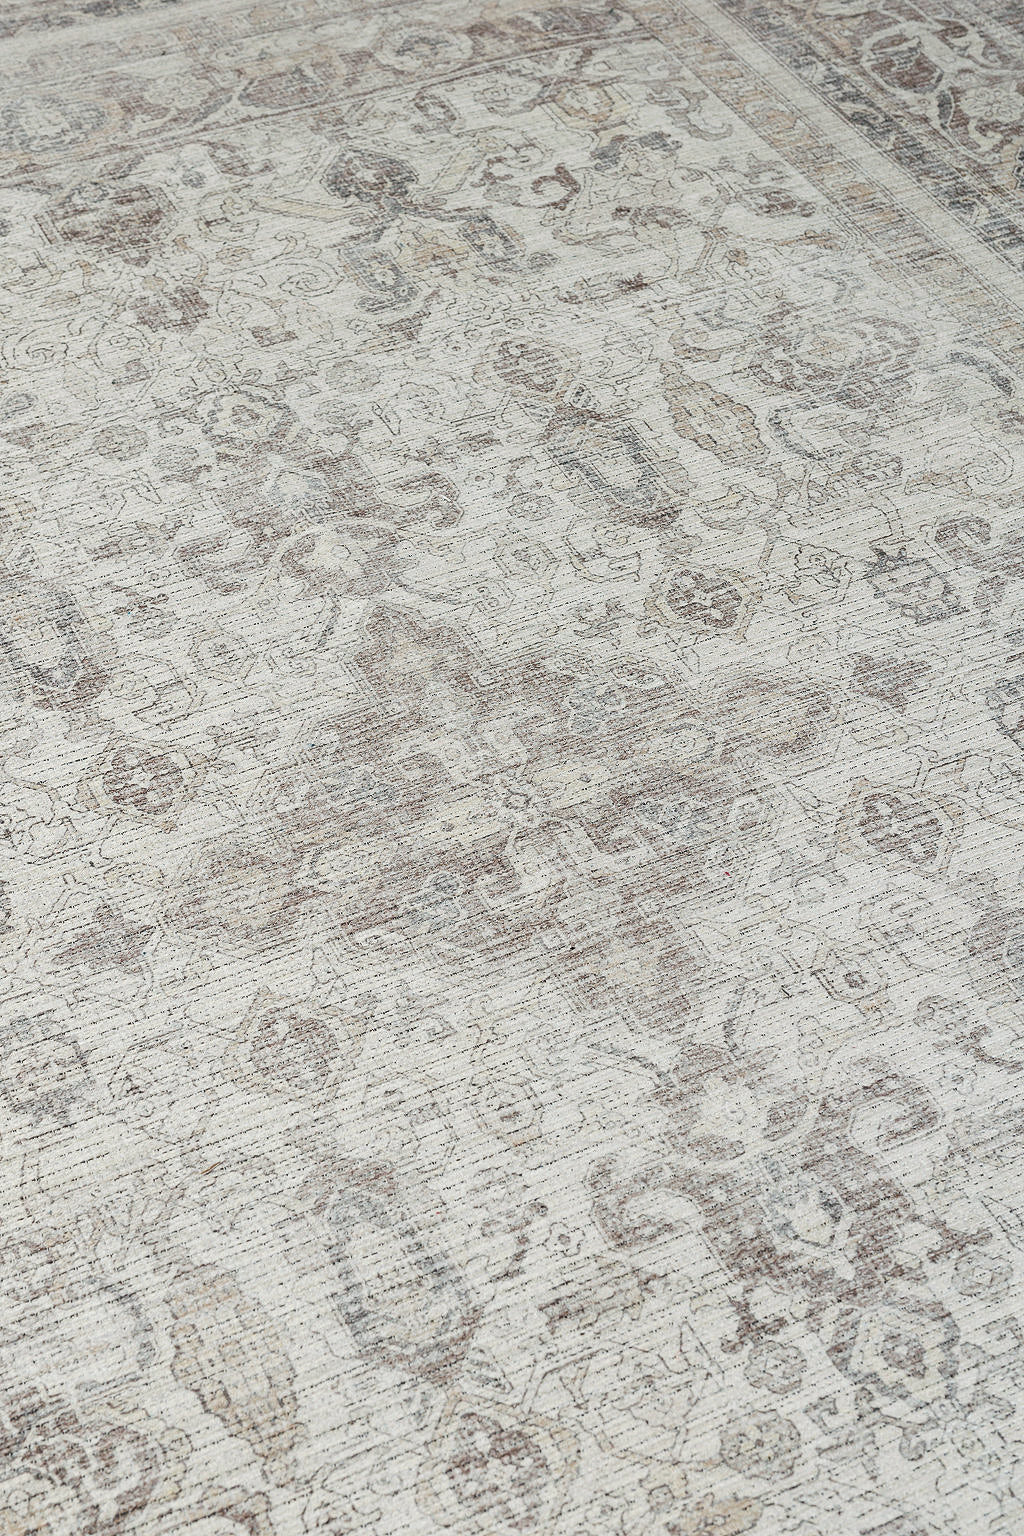 Bordered grey vintage style rug